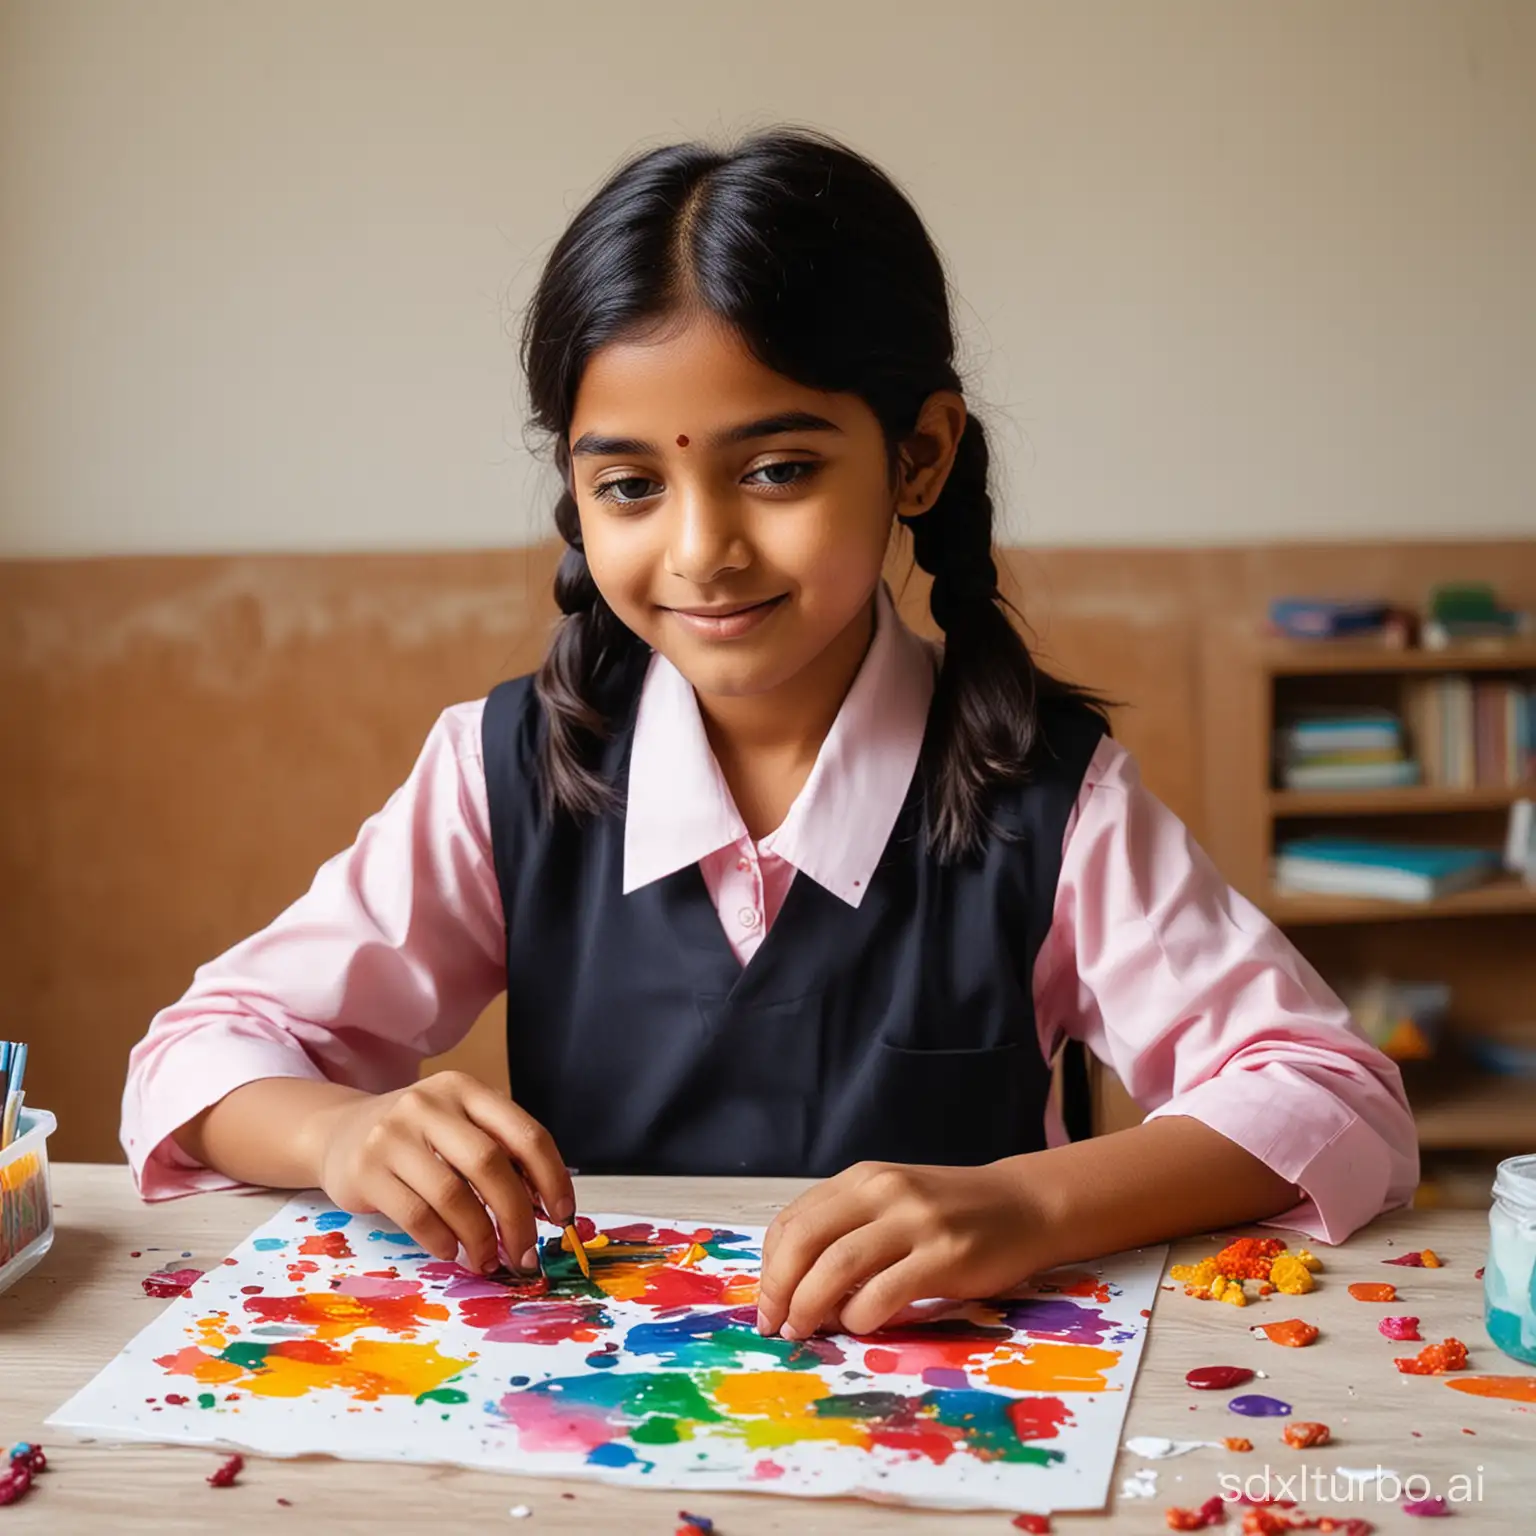 Cute Indian Schoolgirl making resin art